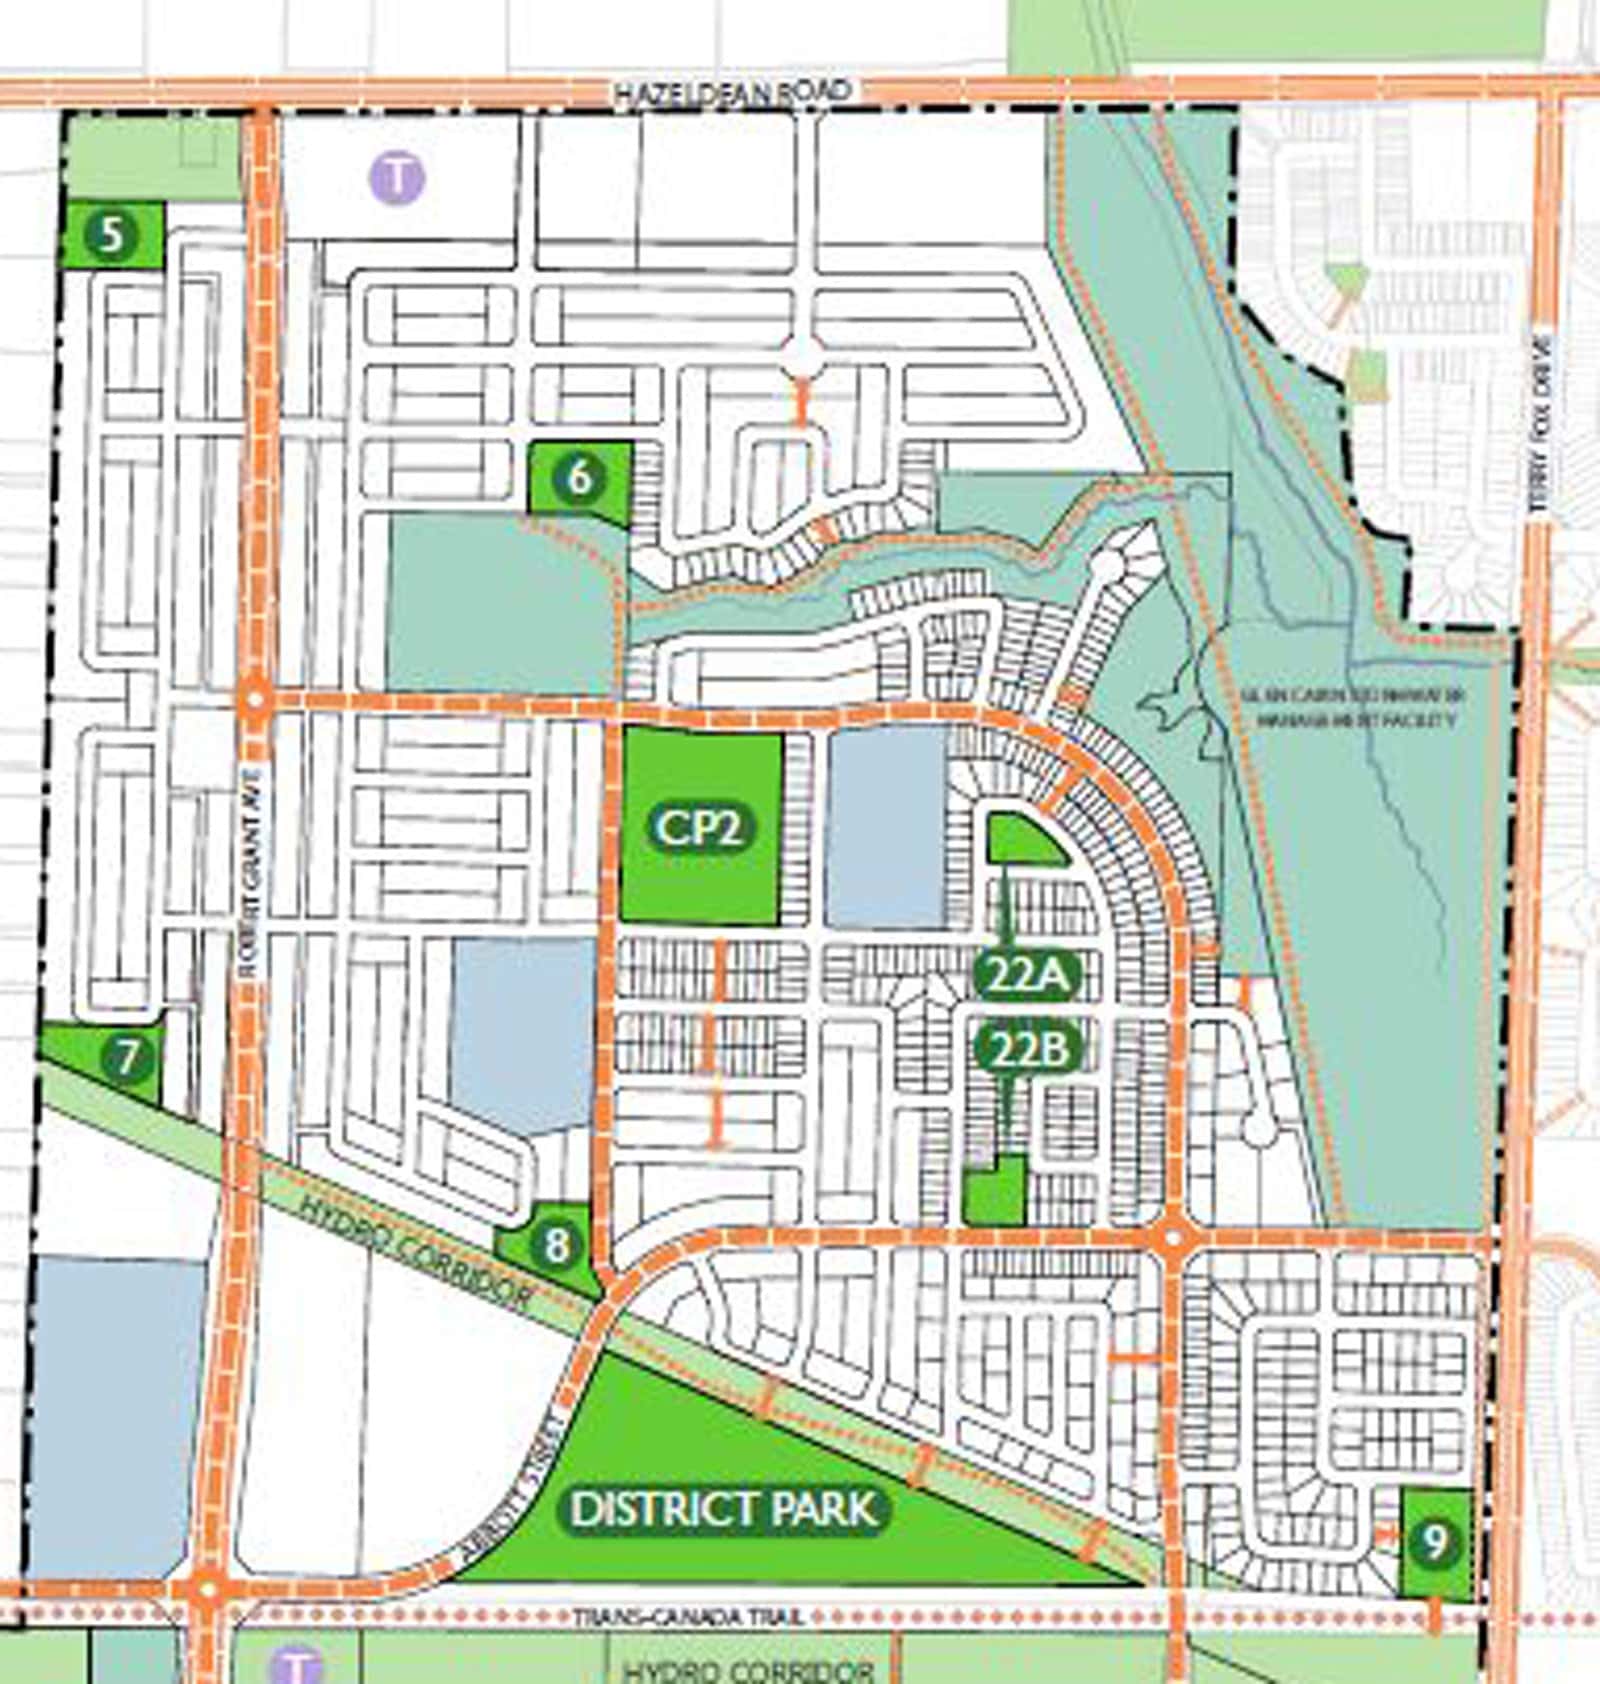 Fernbank parks plan (detail)